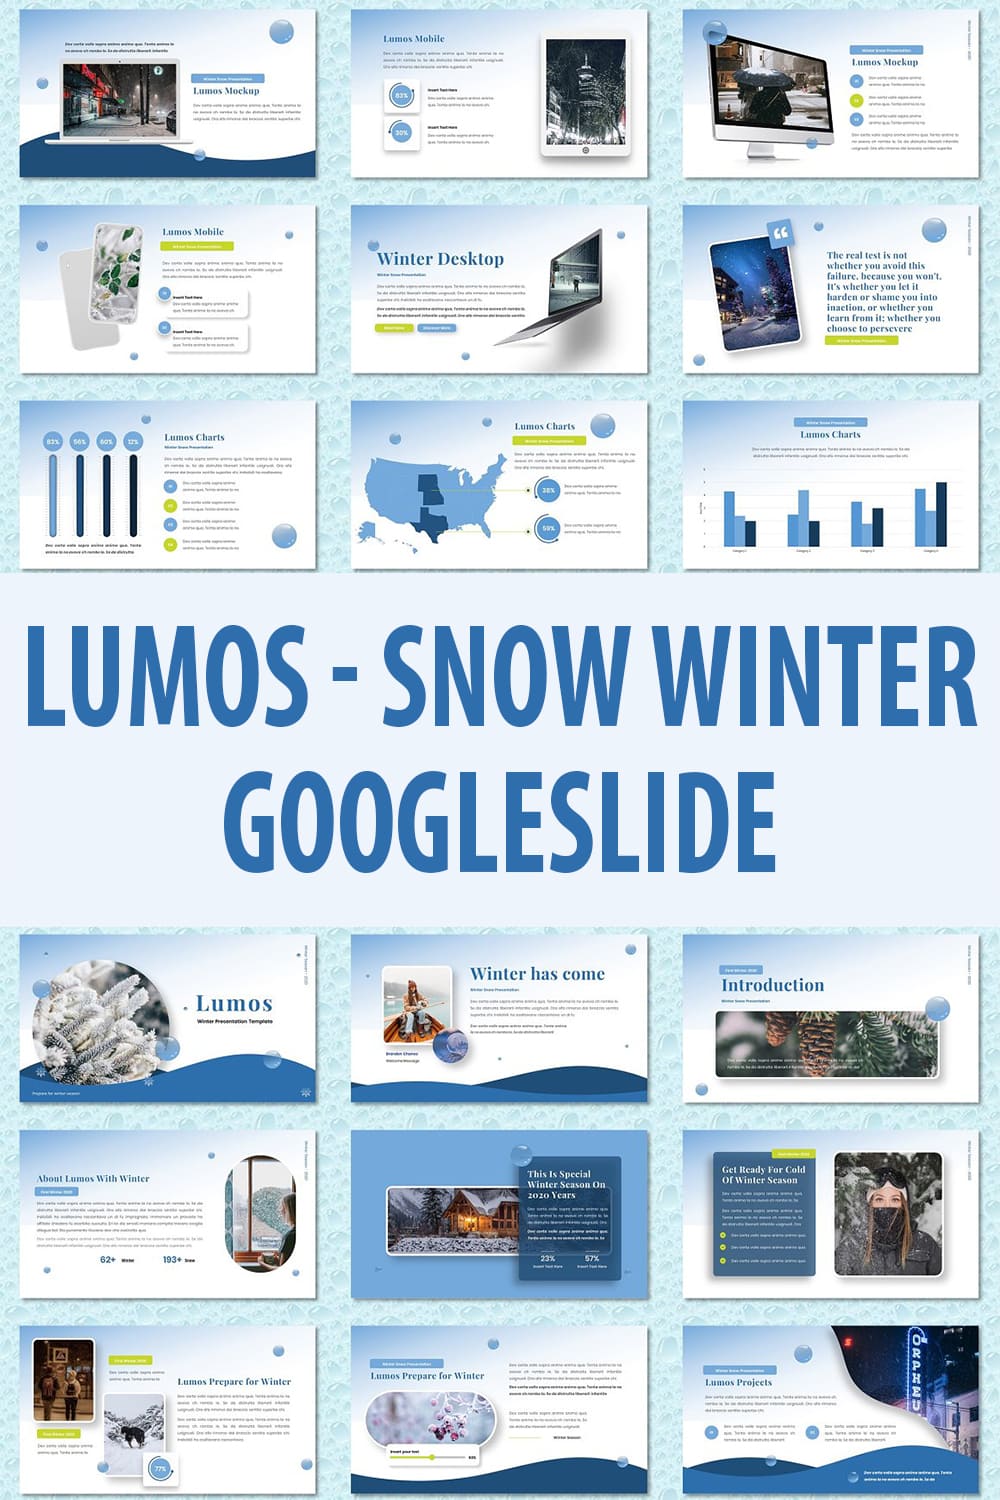 Lumos - Snow Winter Googleslide - Pinterest.